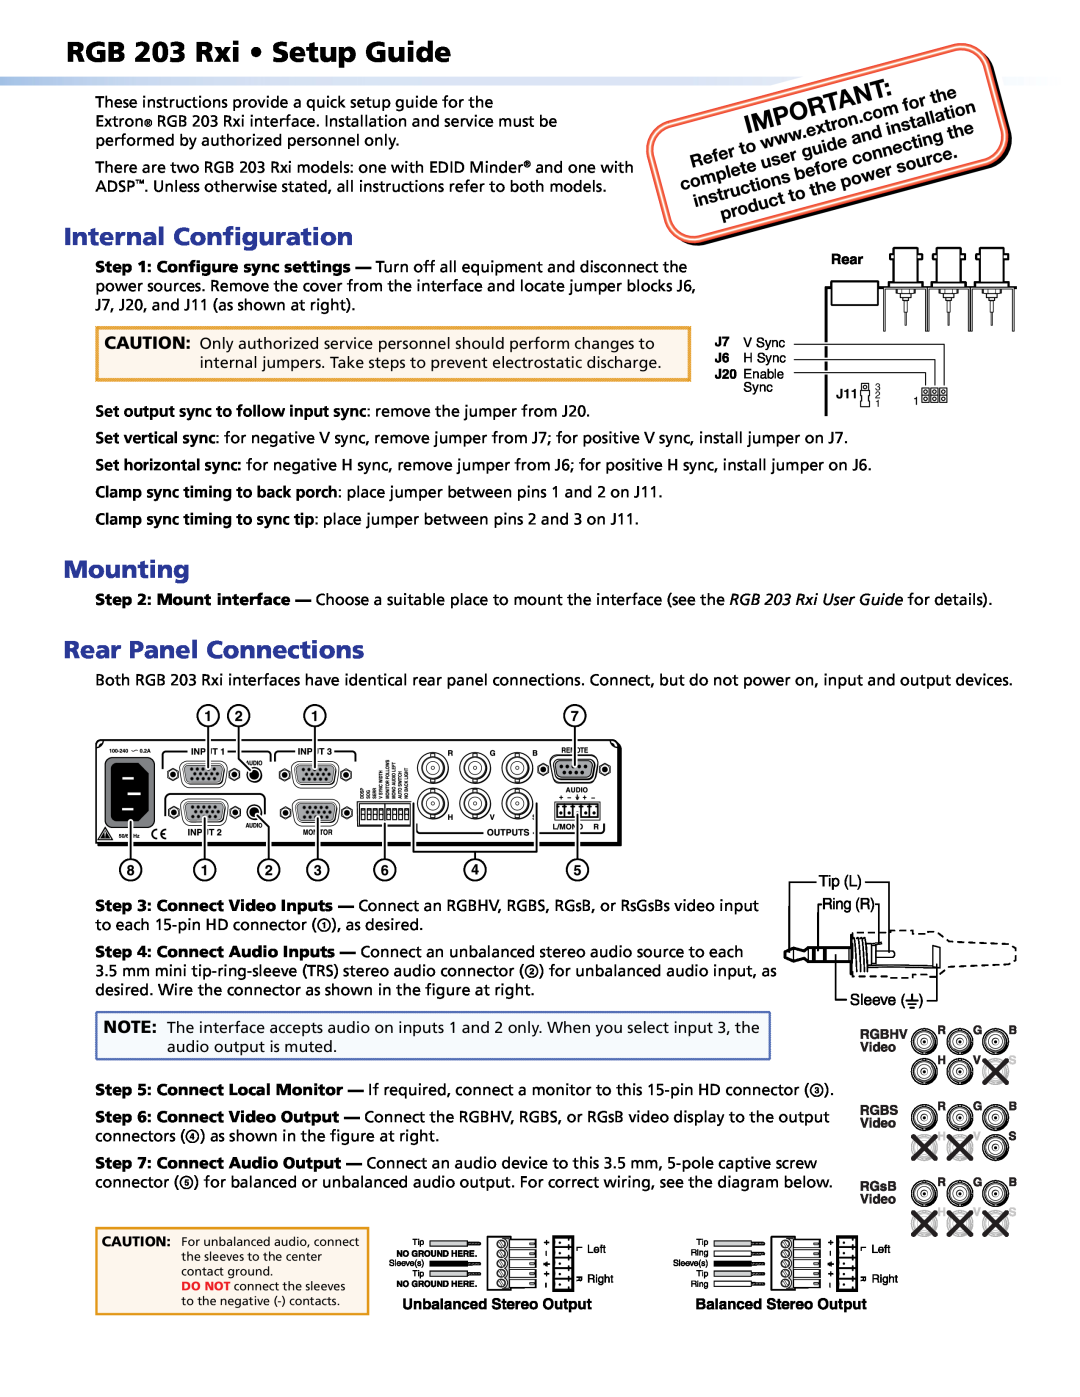 Extron electronic RGB 203 RXI setup guide RGB 203 Rxi Setup Guide, Internal Configuration, Mounting 